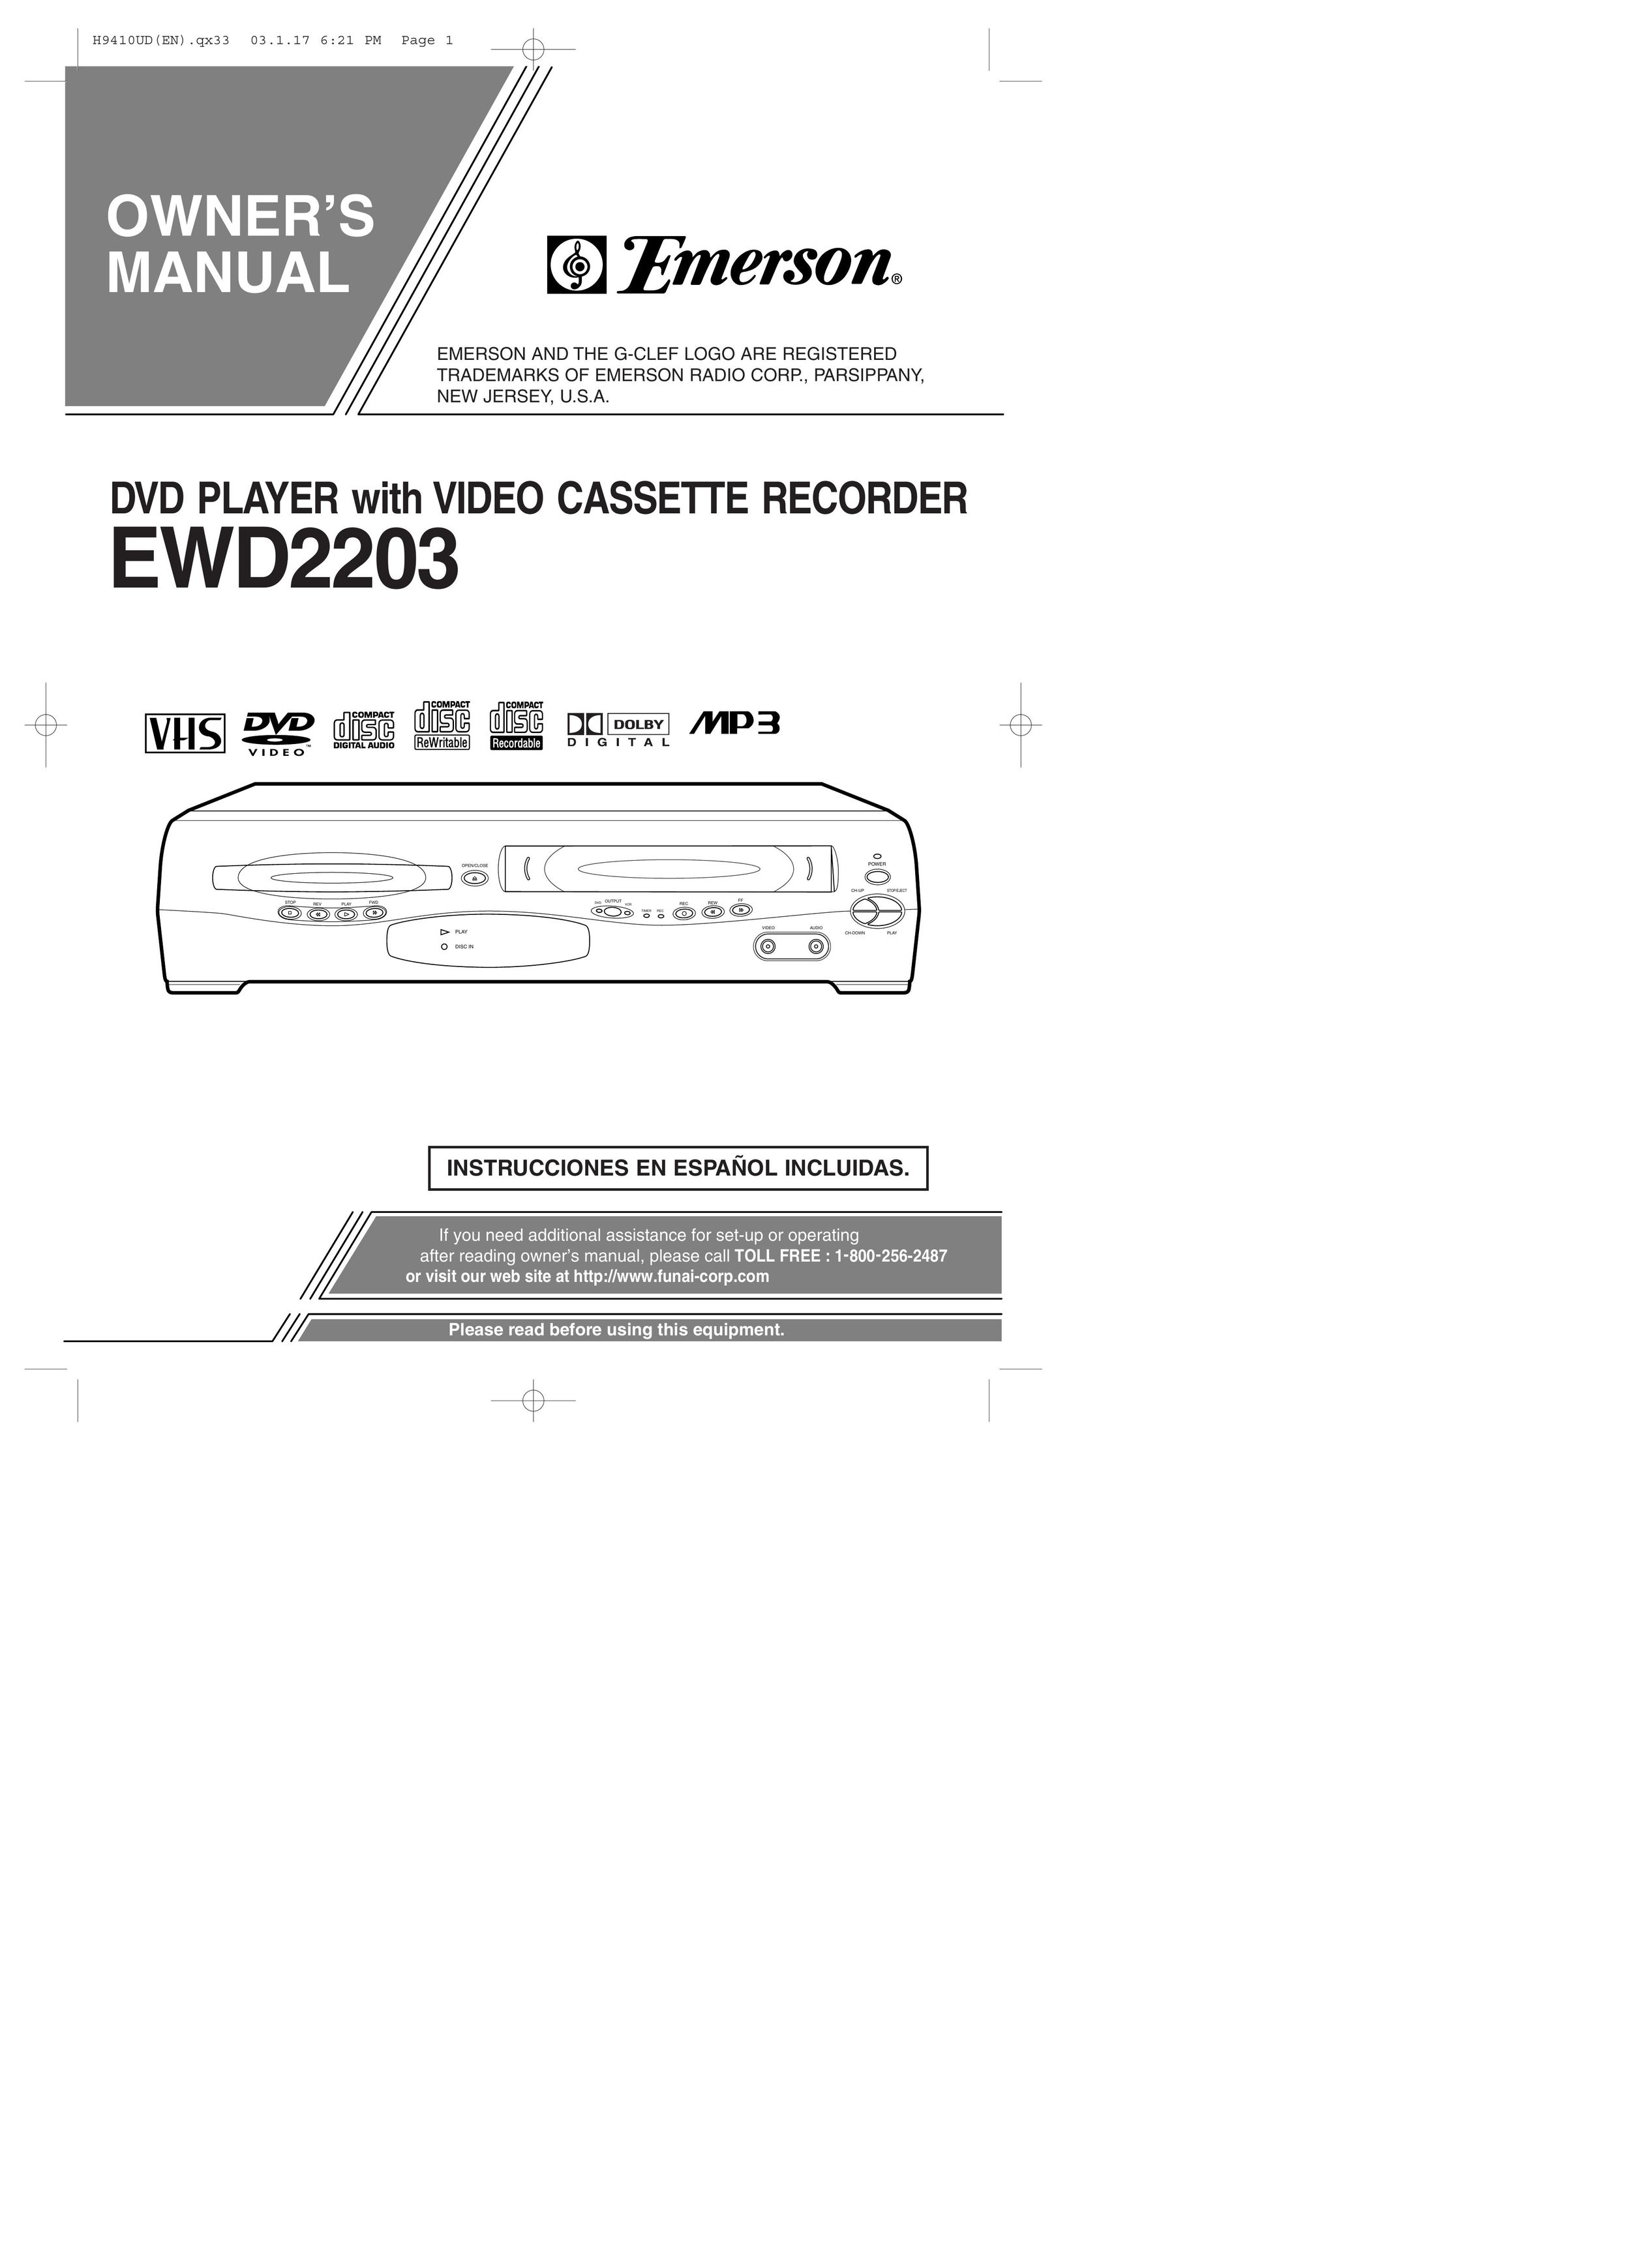 Emerson EWD2203 DVD VCR Combo User Manual